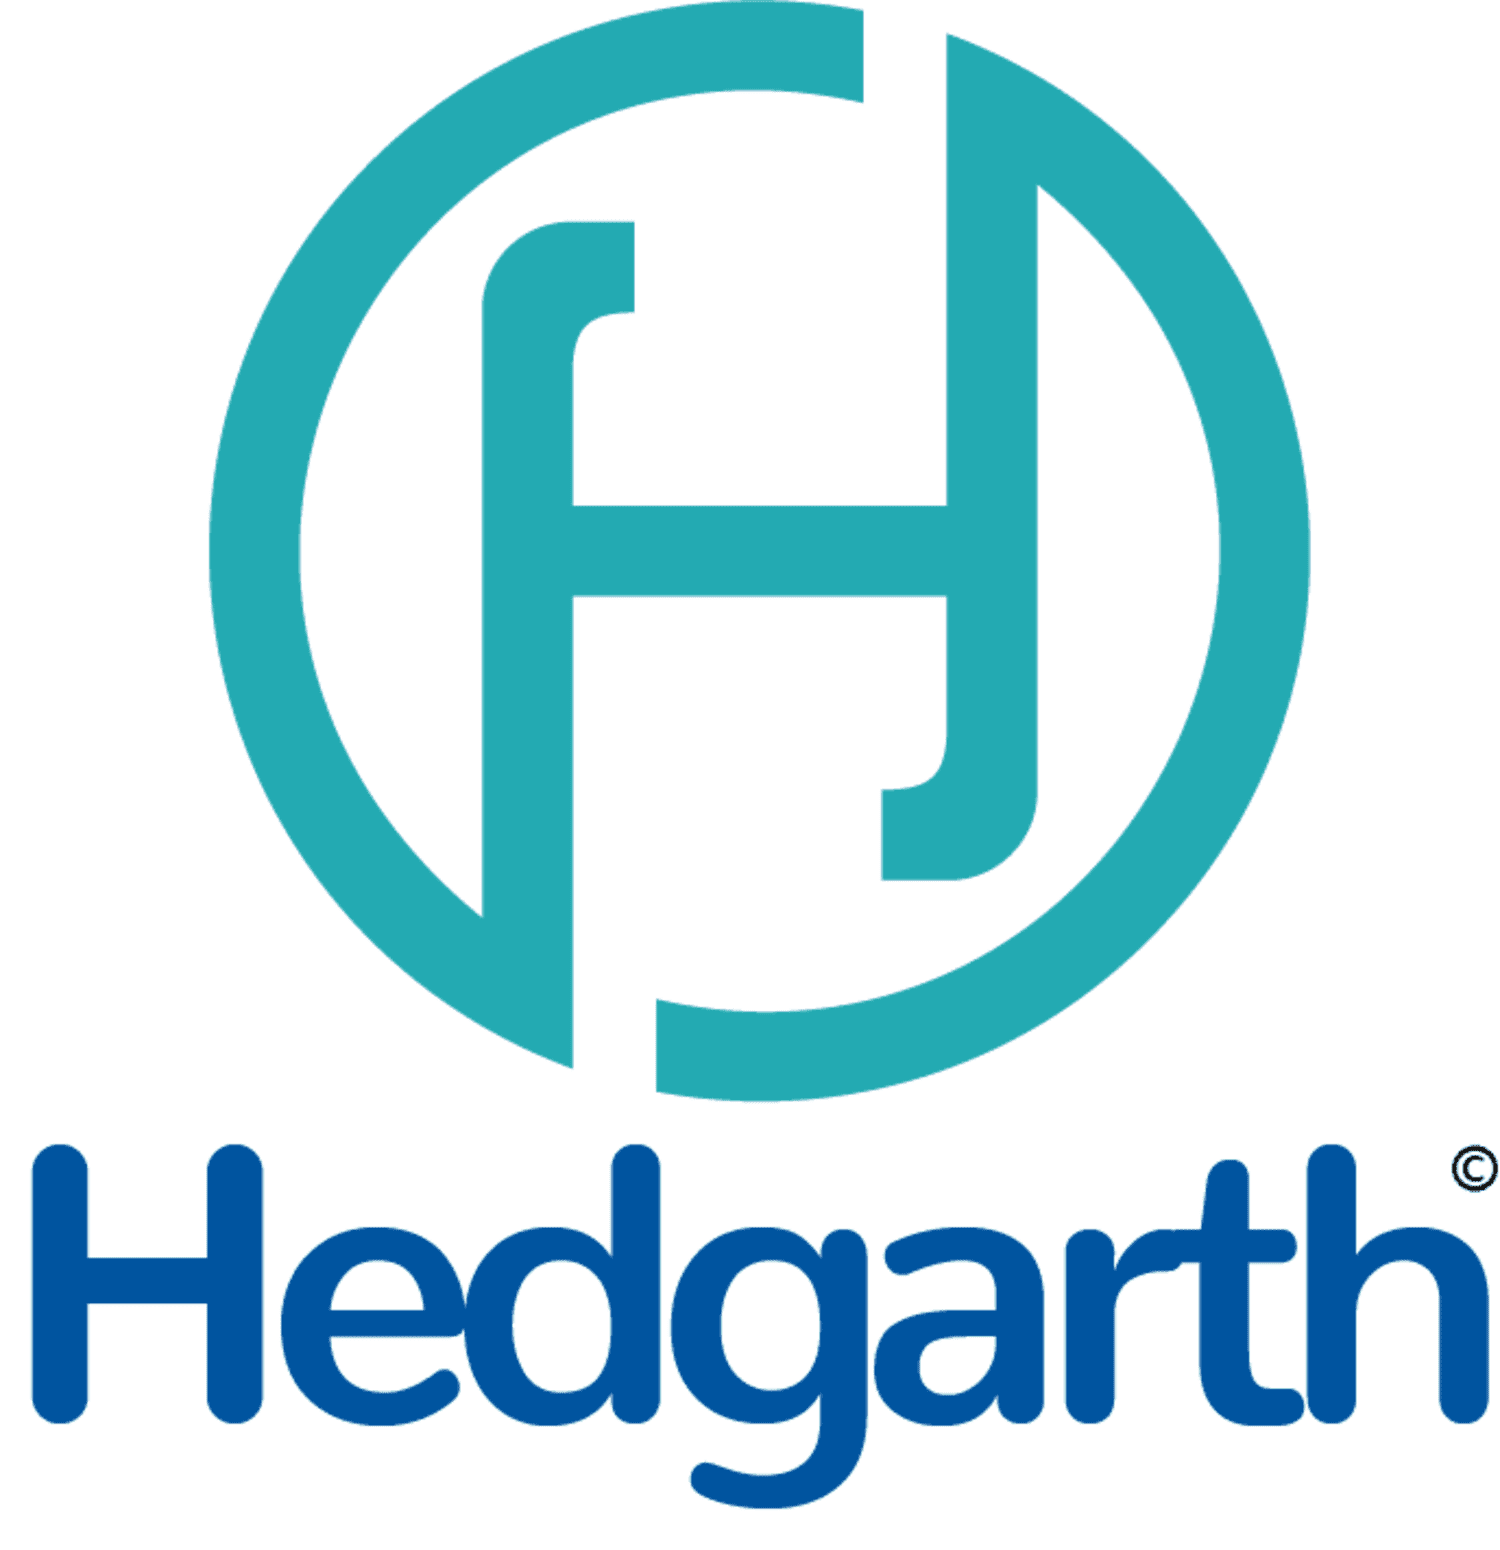 Hedgarth